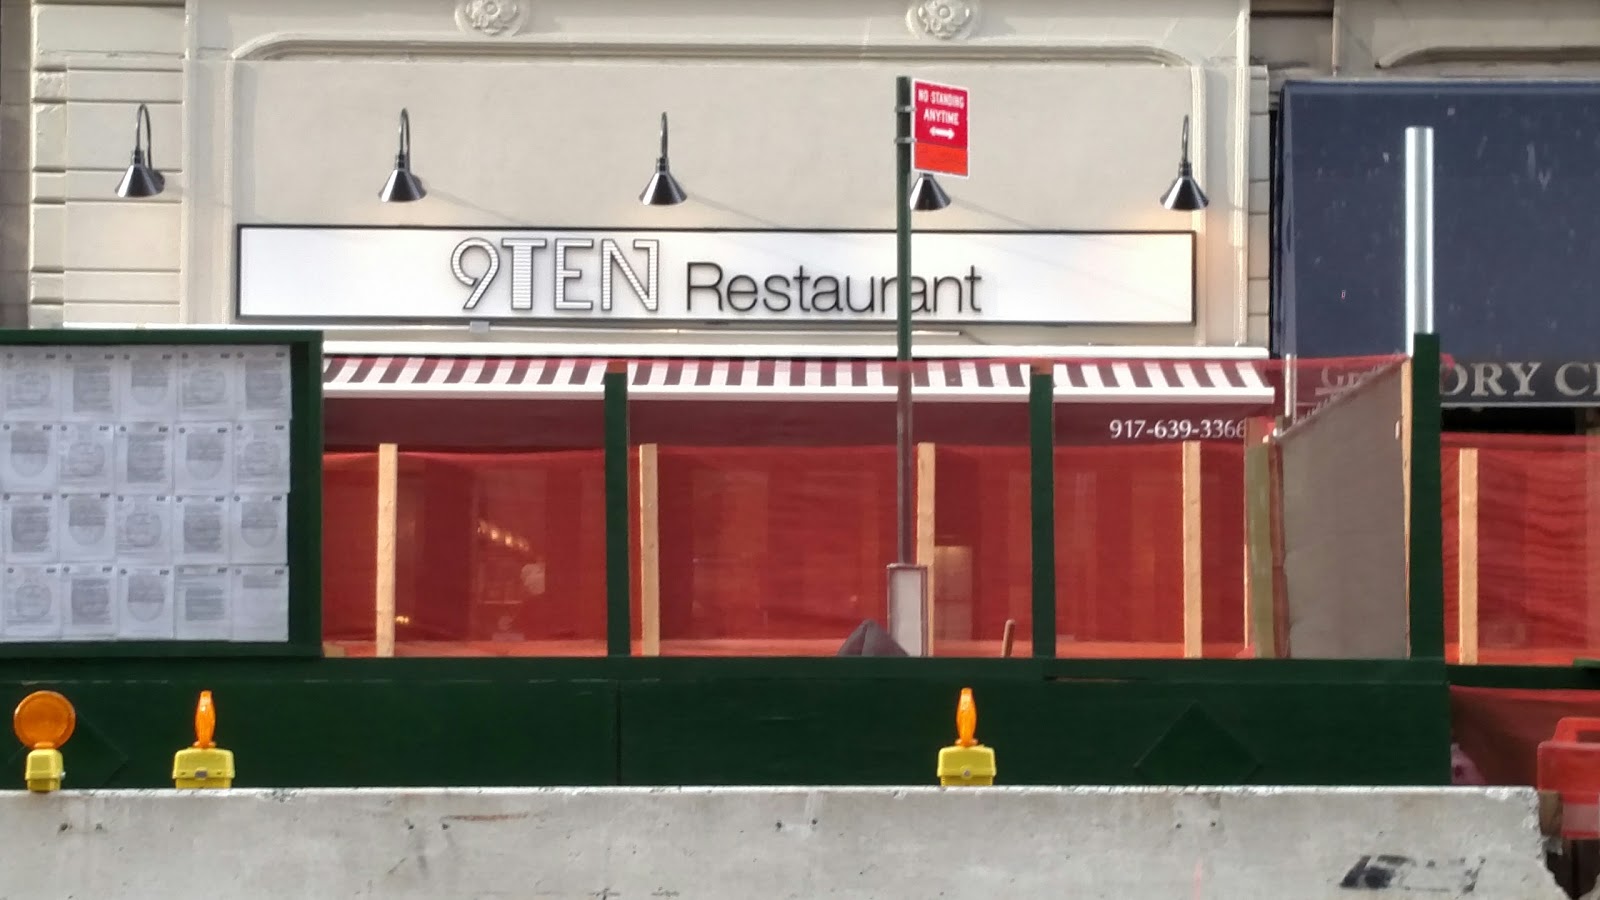 Photo of 9Ten Restaurant in New York City, New York, United States - 2 Picture of Restaurant, Food, Point of interest, Establishment